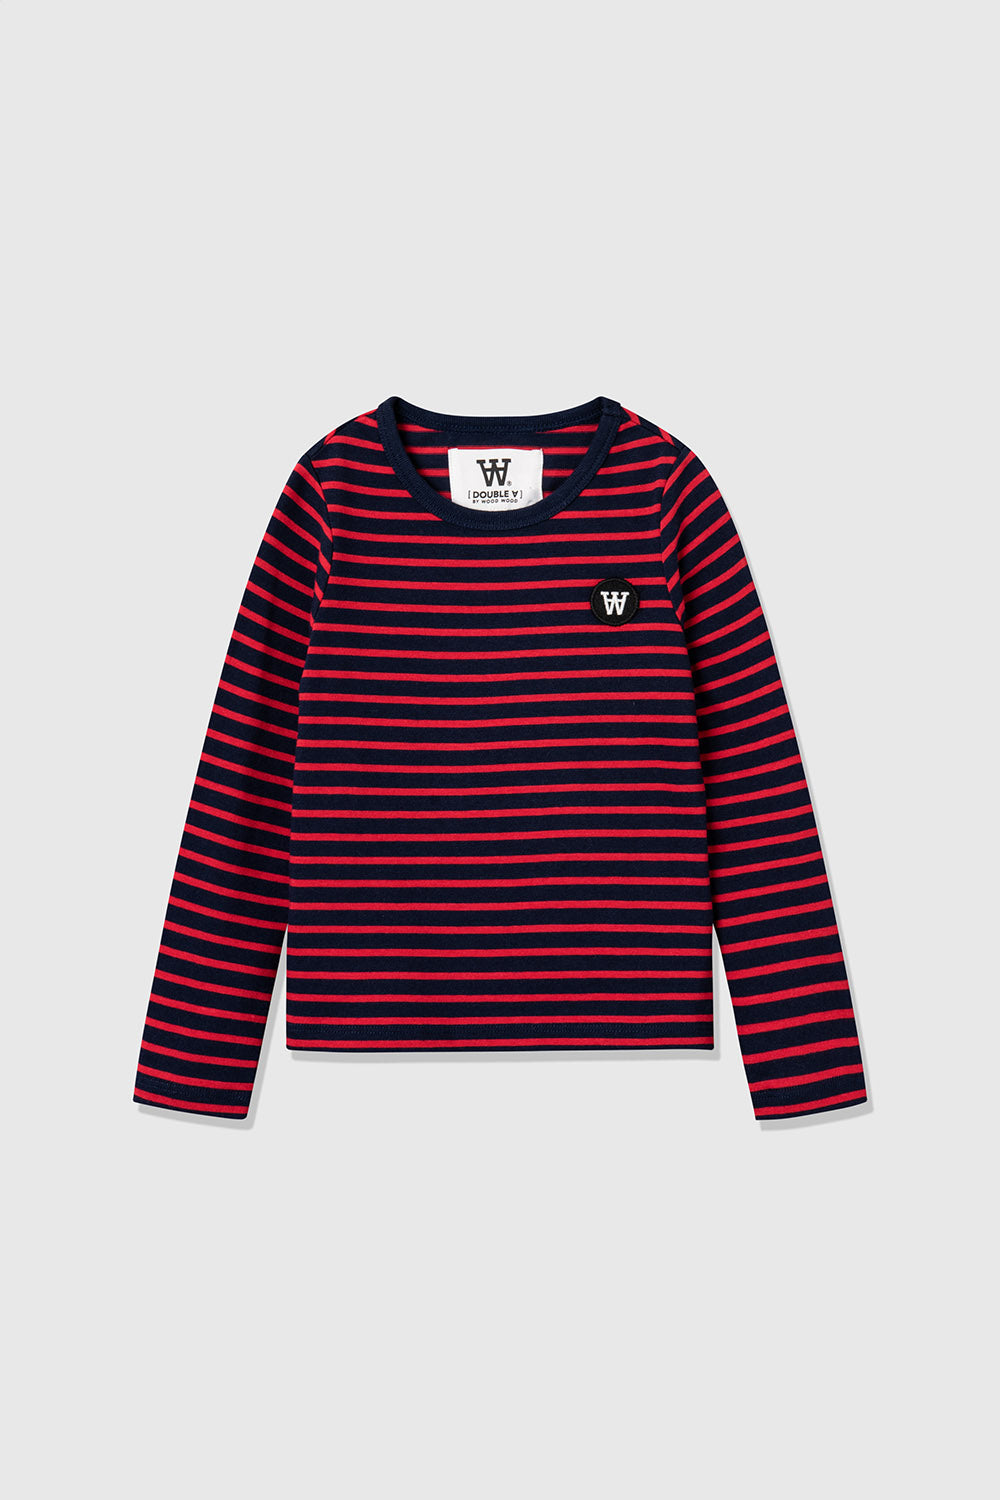 Navy/red stripes